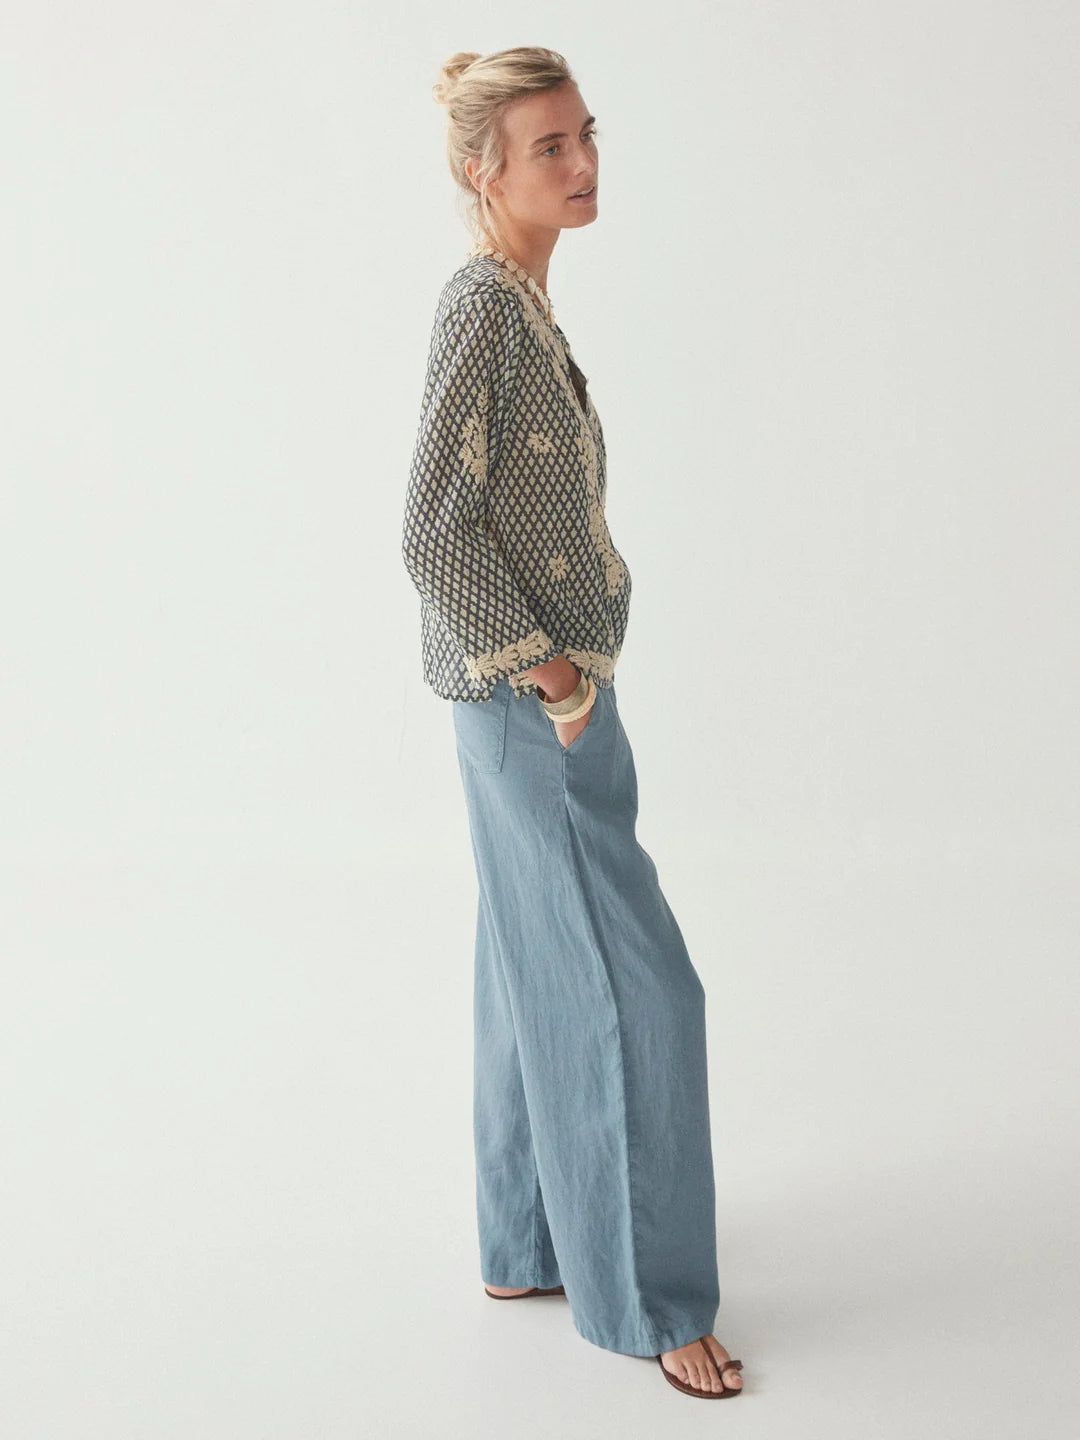 Model wears full length blue linen trousers